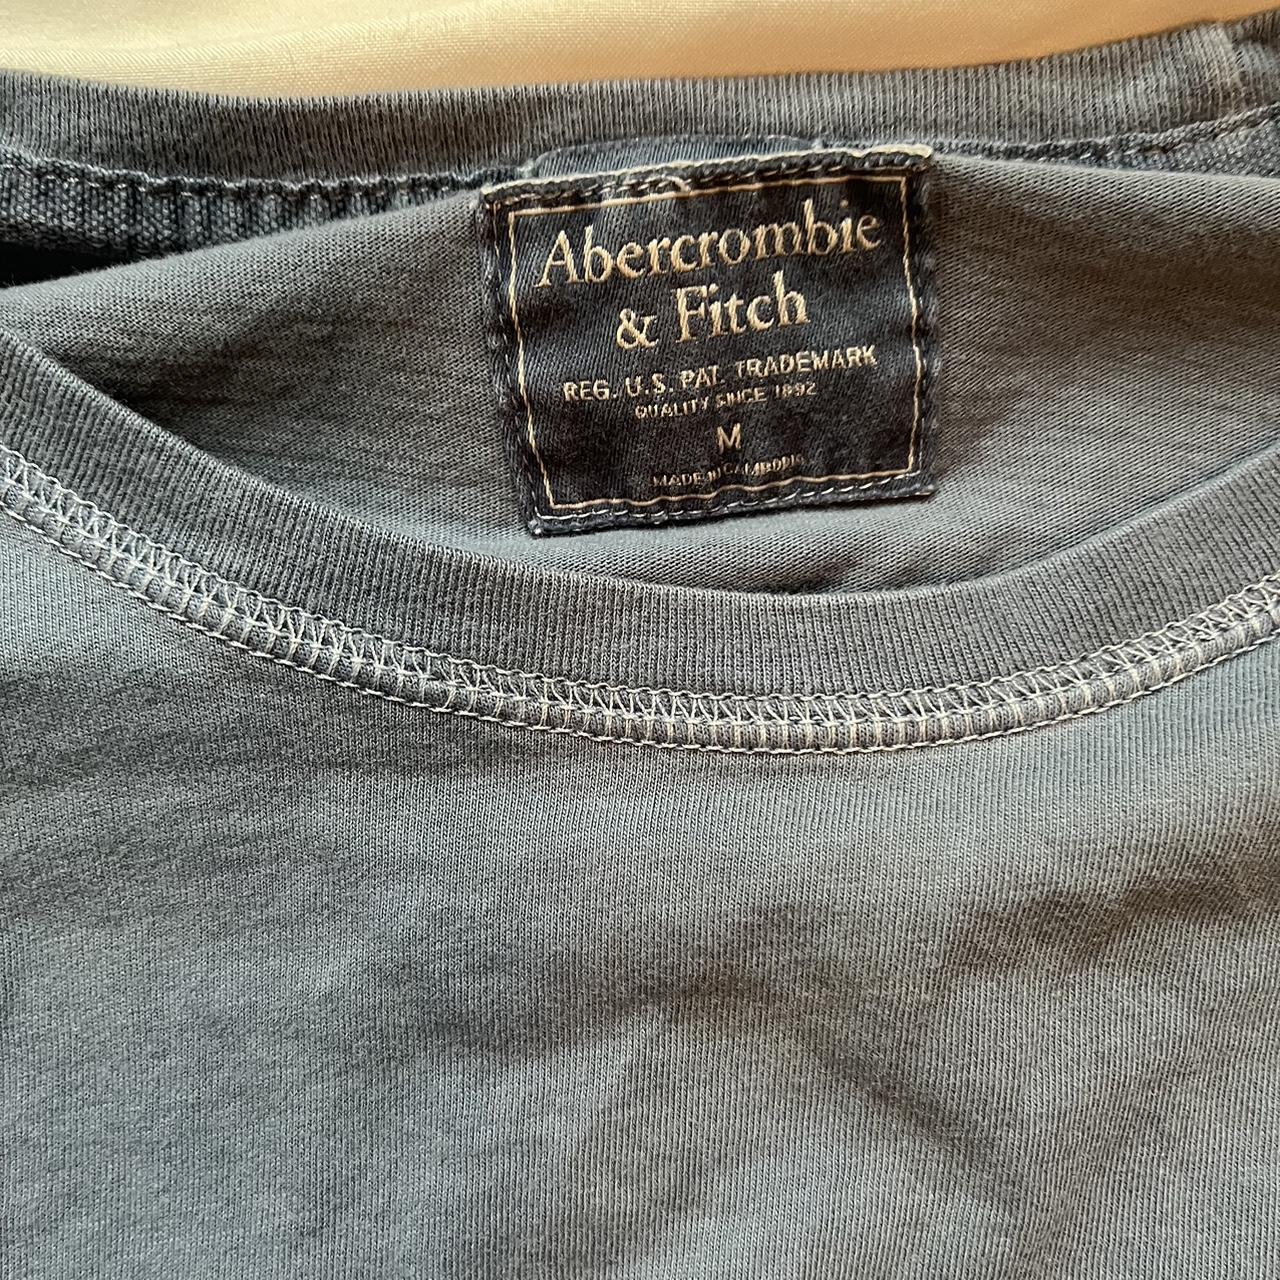 Basic Abercombie & Fitch long sleeve shirt ️ No... - Depop